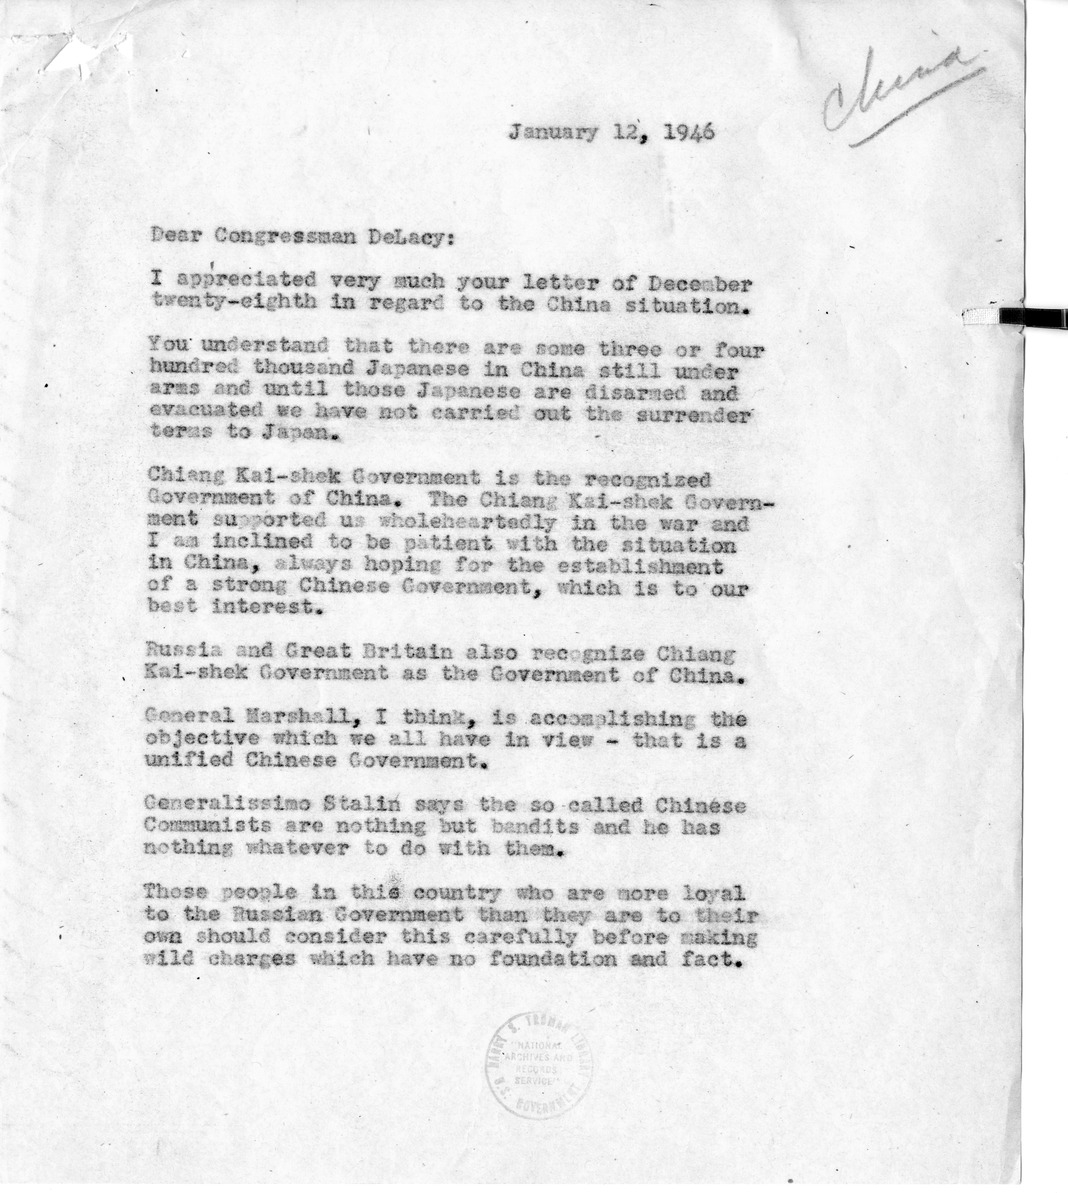 Letter from President Harry S. Truman to Congressman Hugh De Lacy